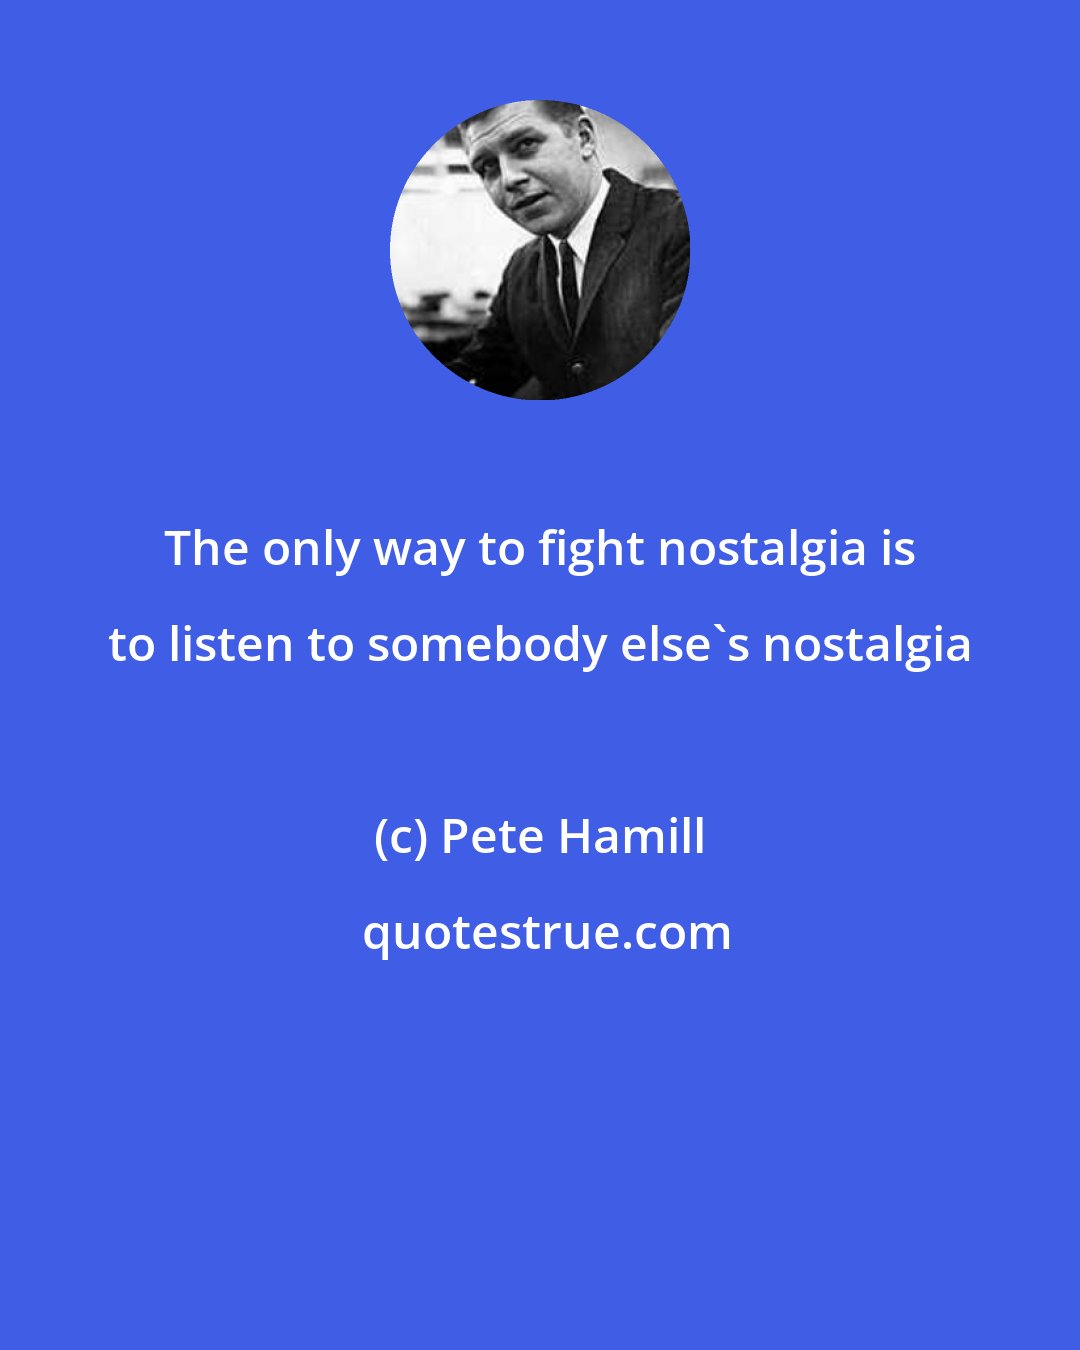 Pete Hamill: The only way to fight nostalgia is to listen to somebody else's nostalgia